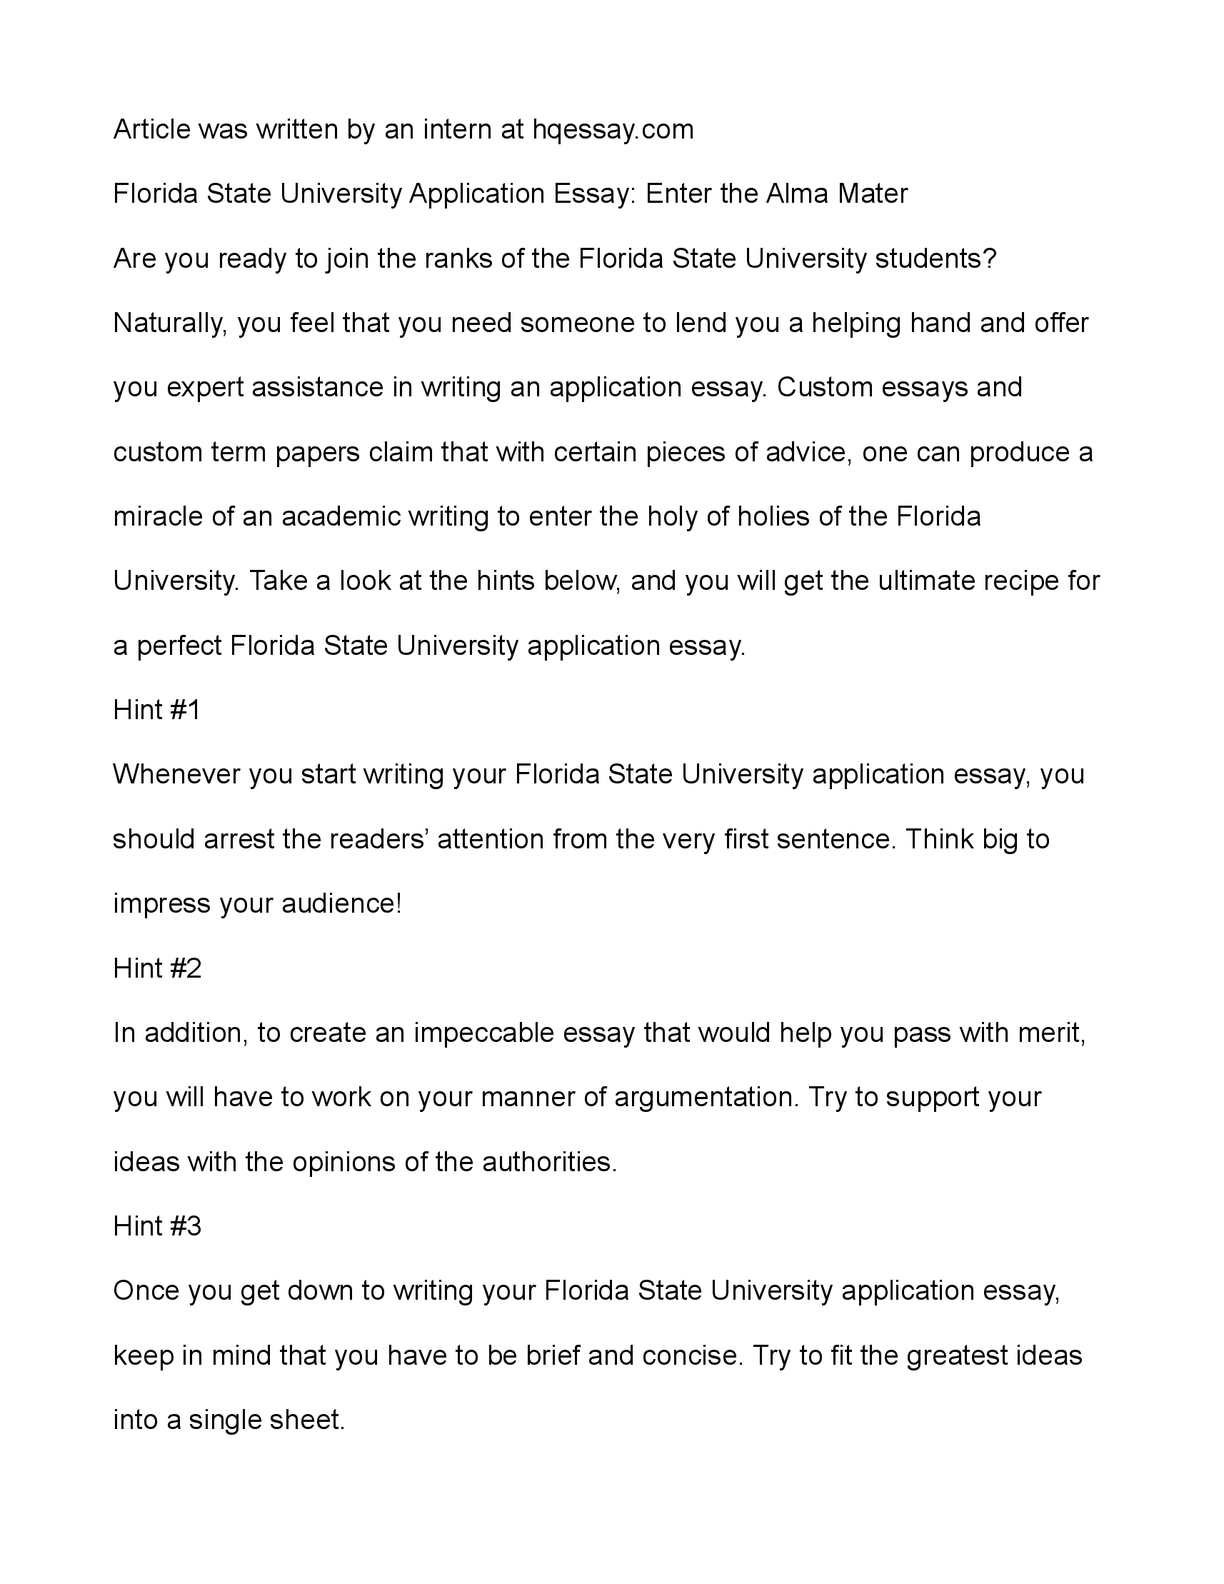 Florida state university essay